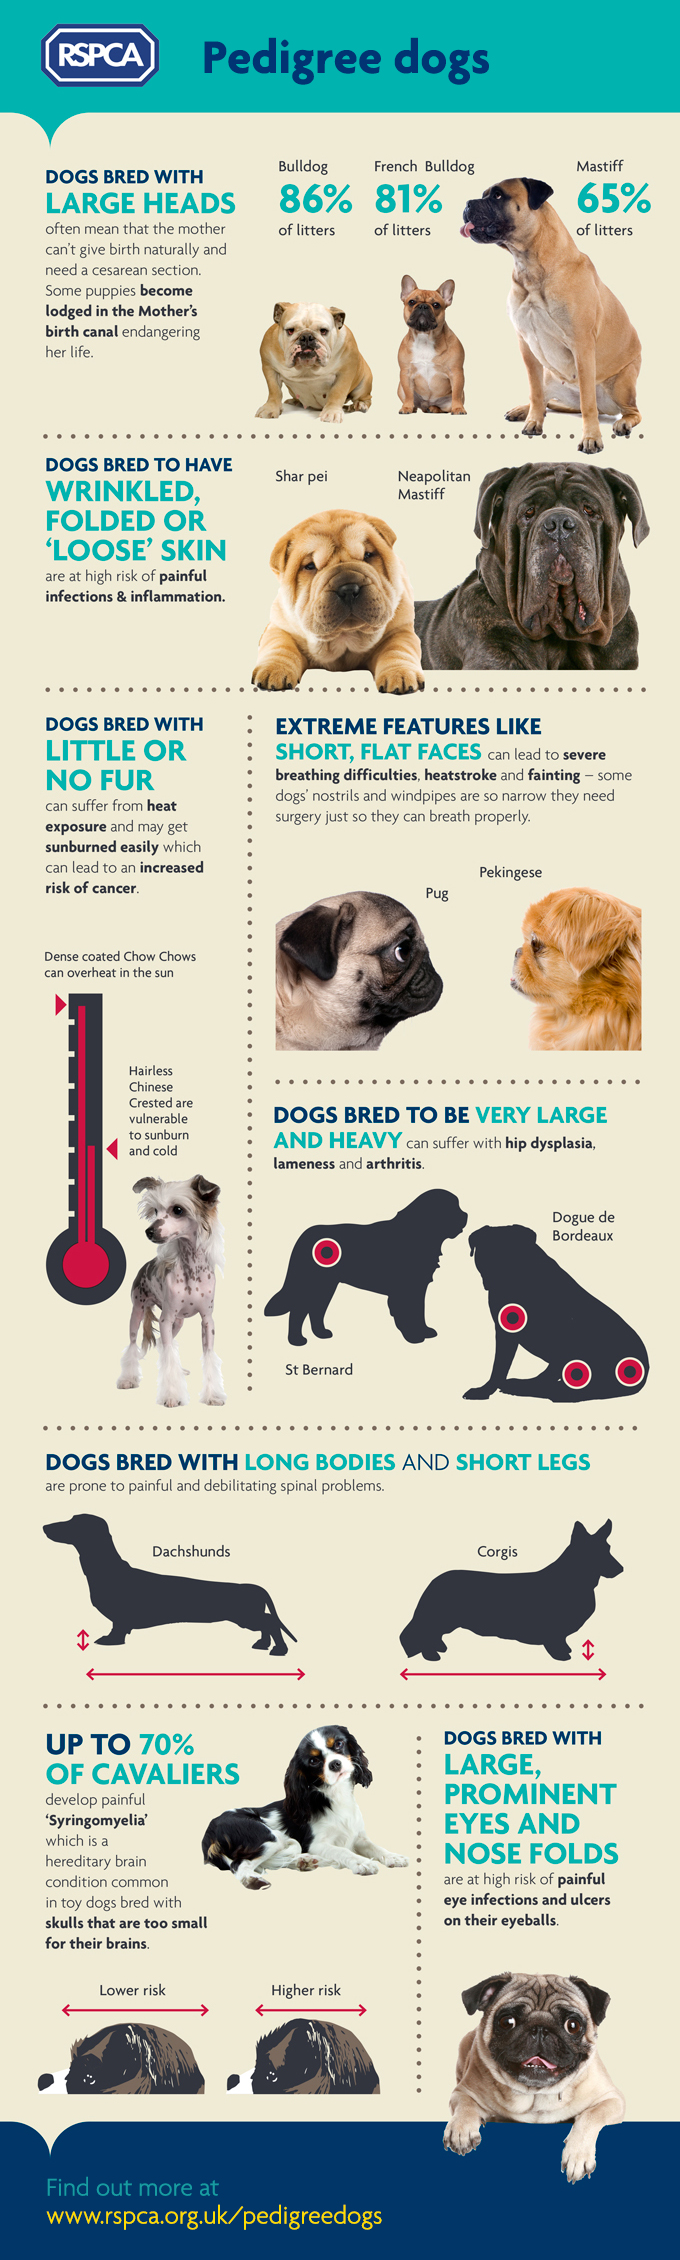 Pedigree dogs health problems | RSPCA